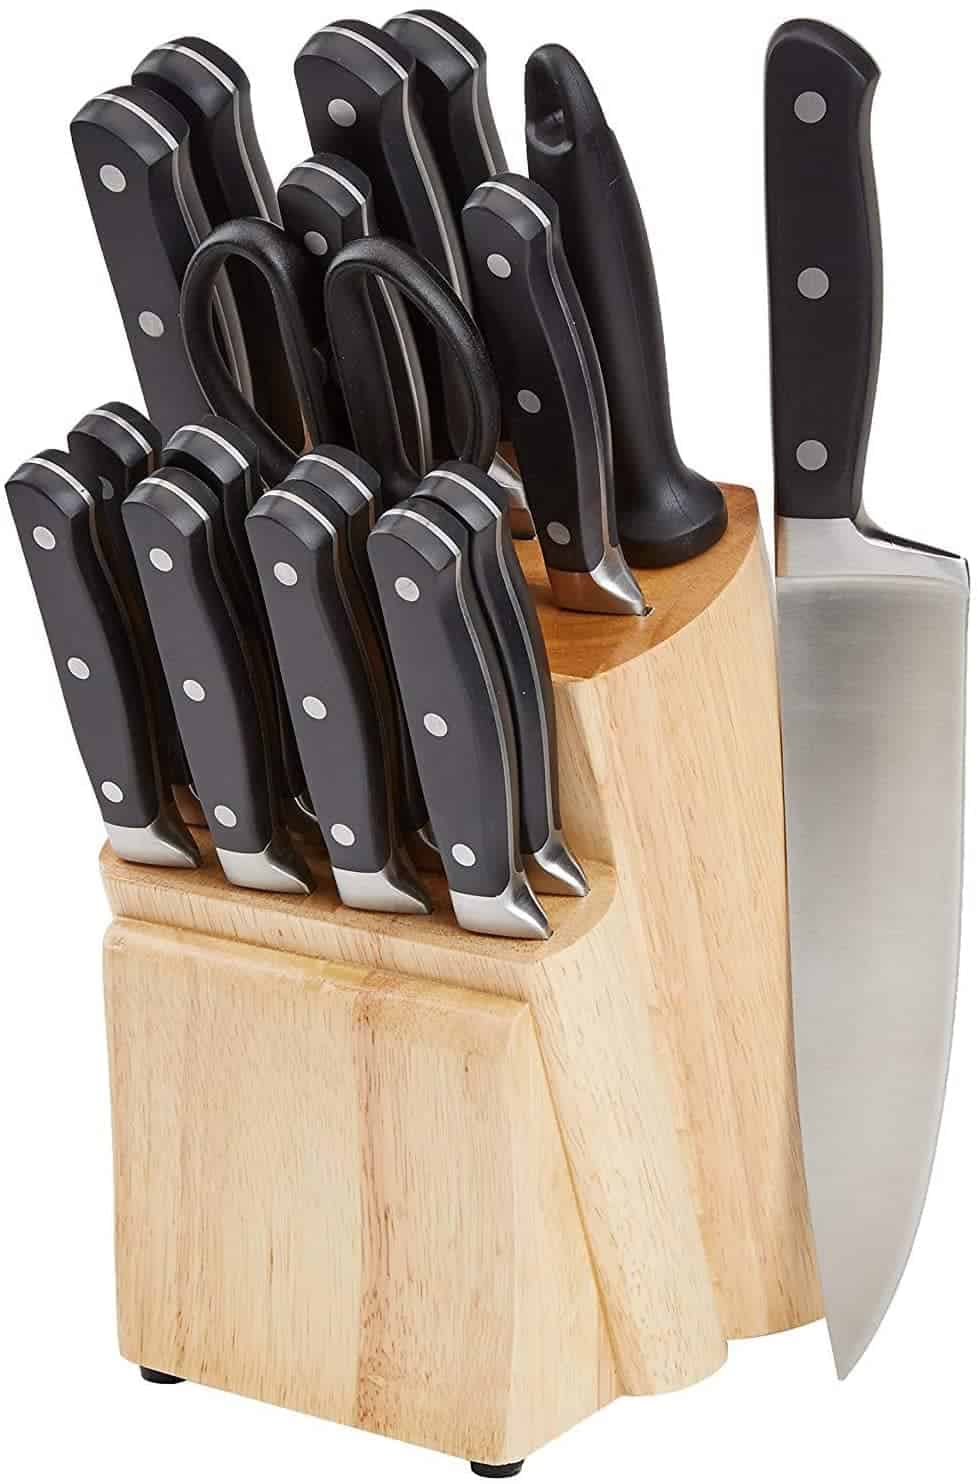 AmazonBasics Kitchen Knives